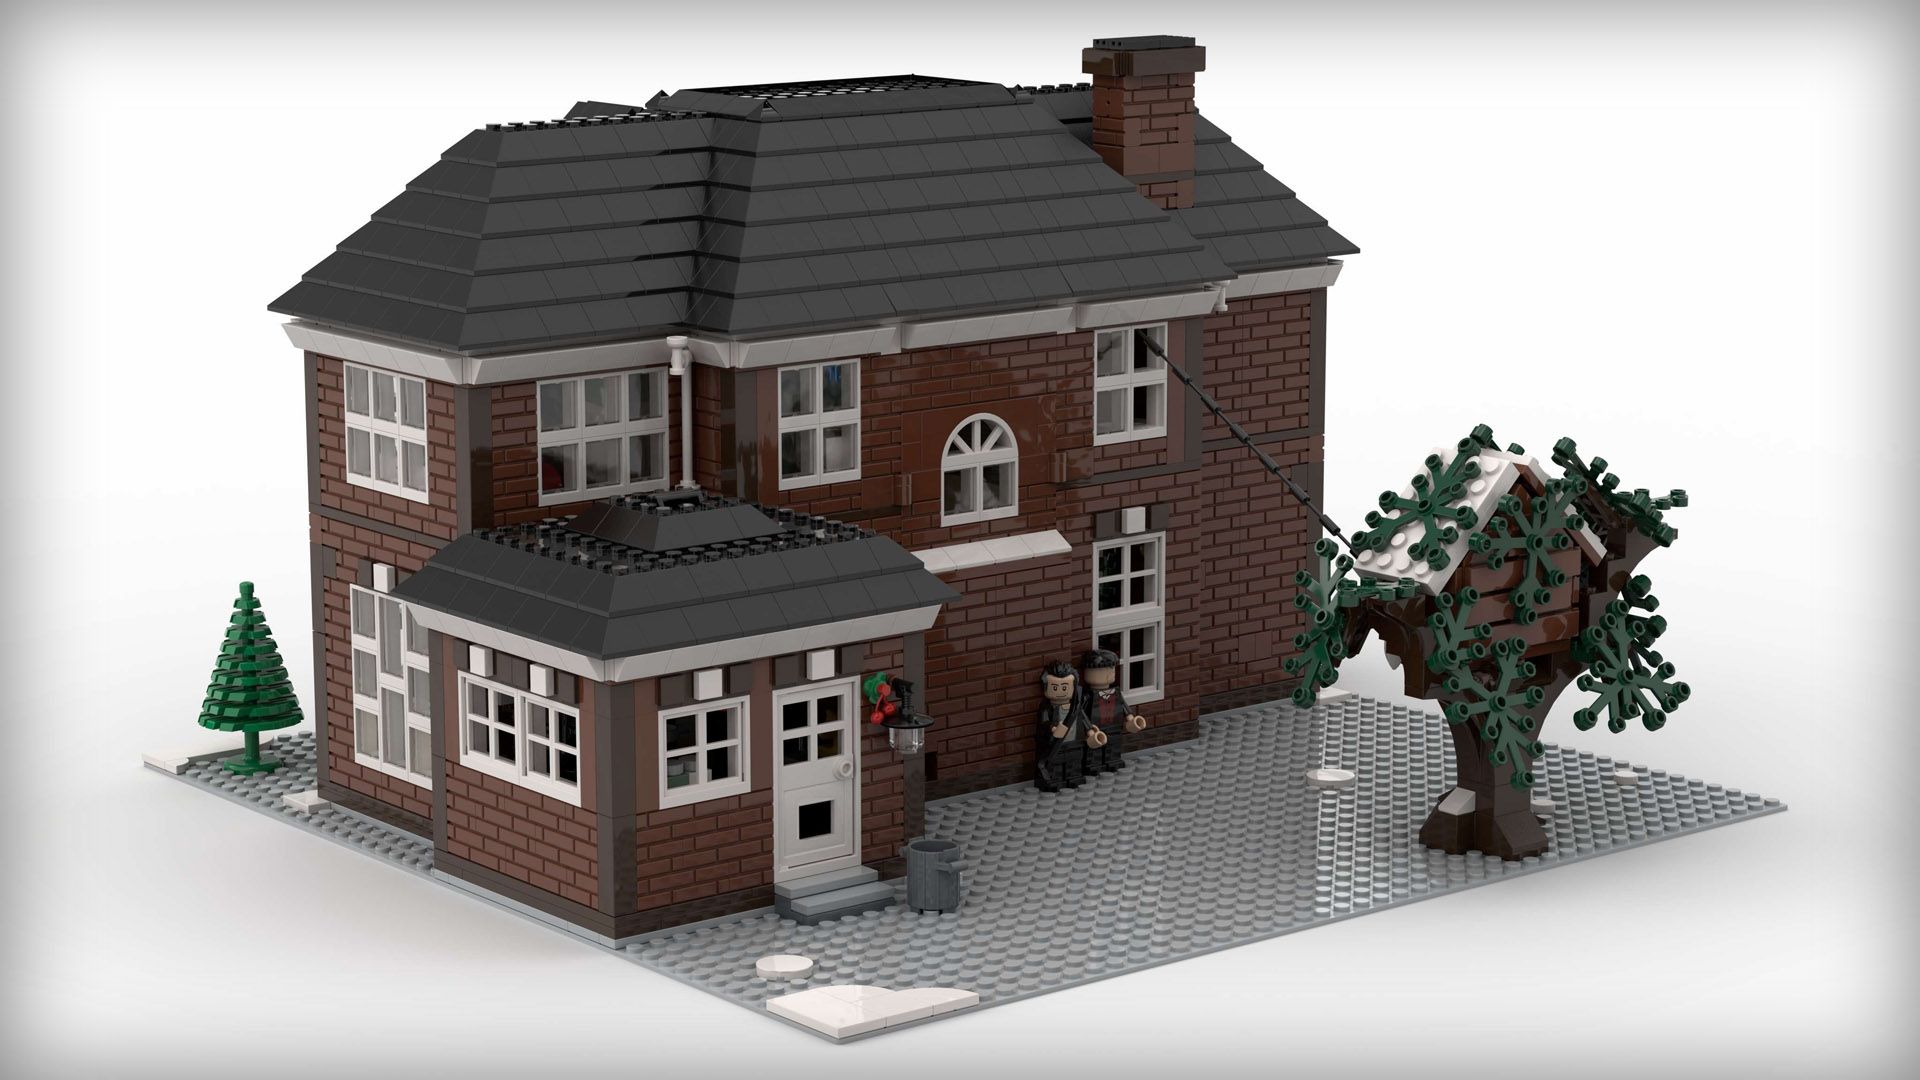 Lego Home Alone House image 1